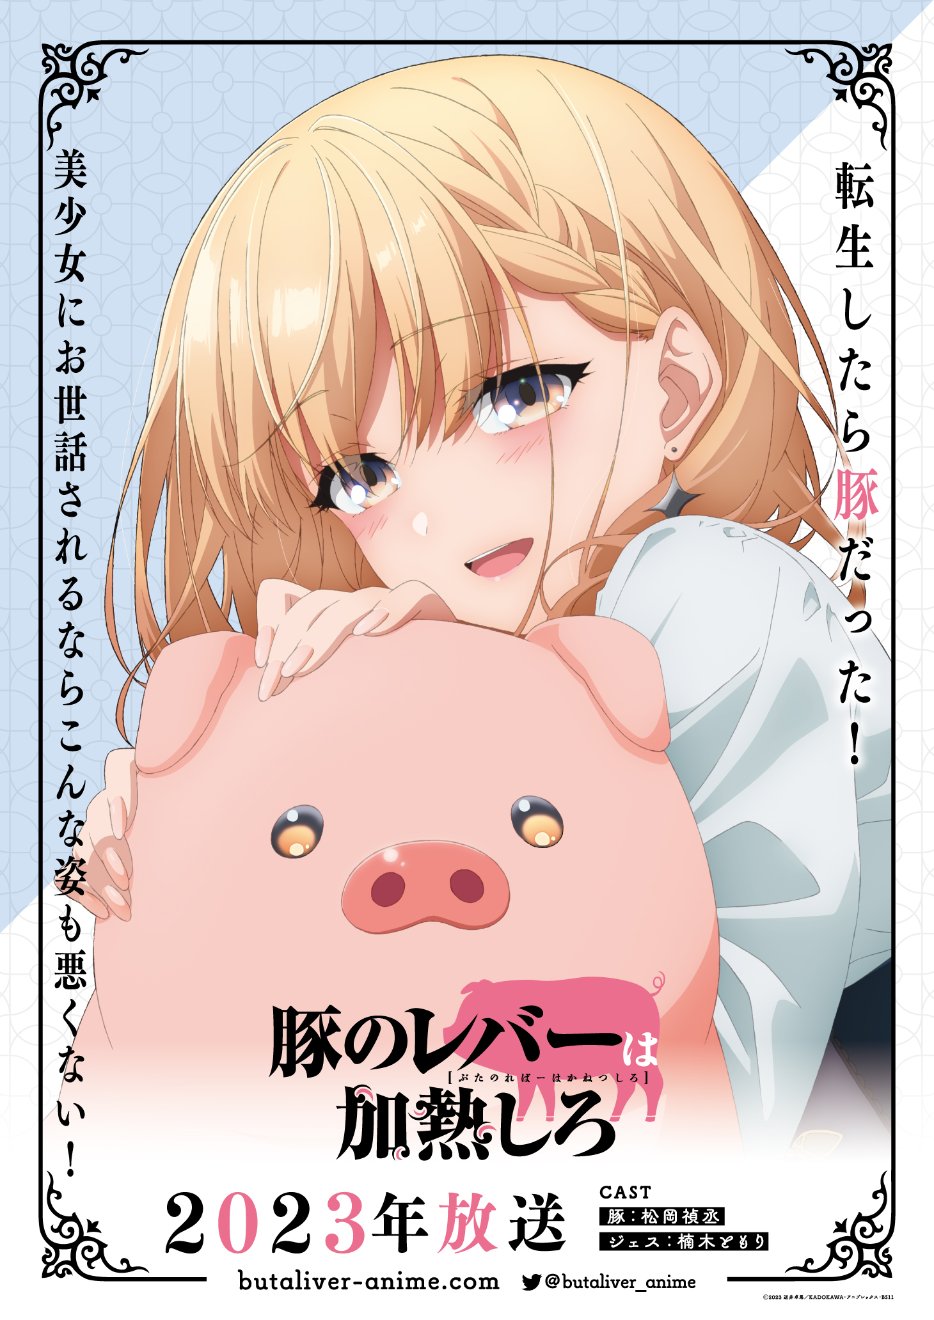 heat pig liver anime